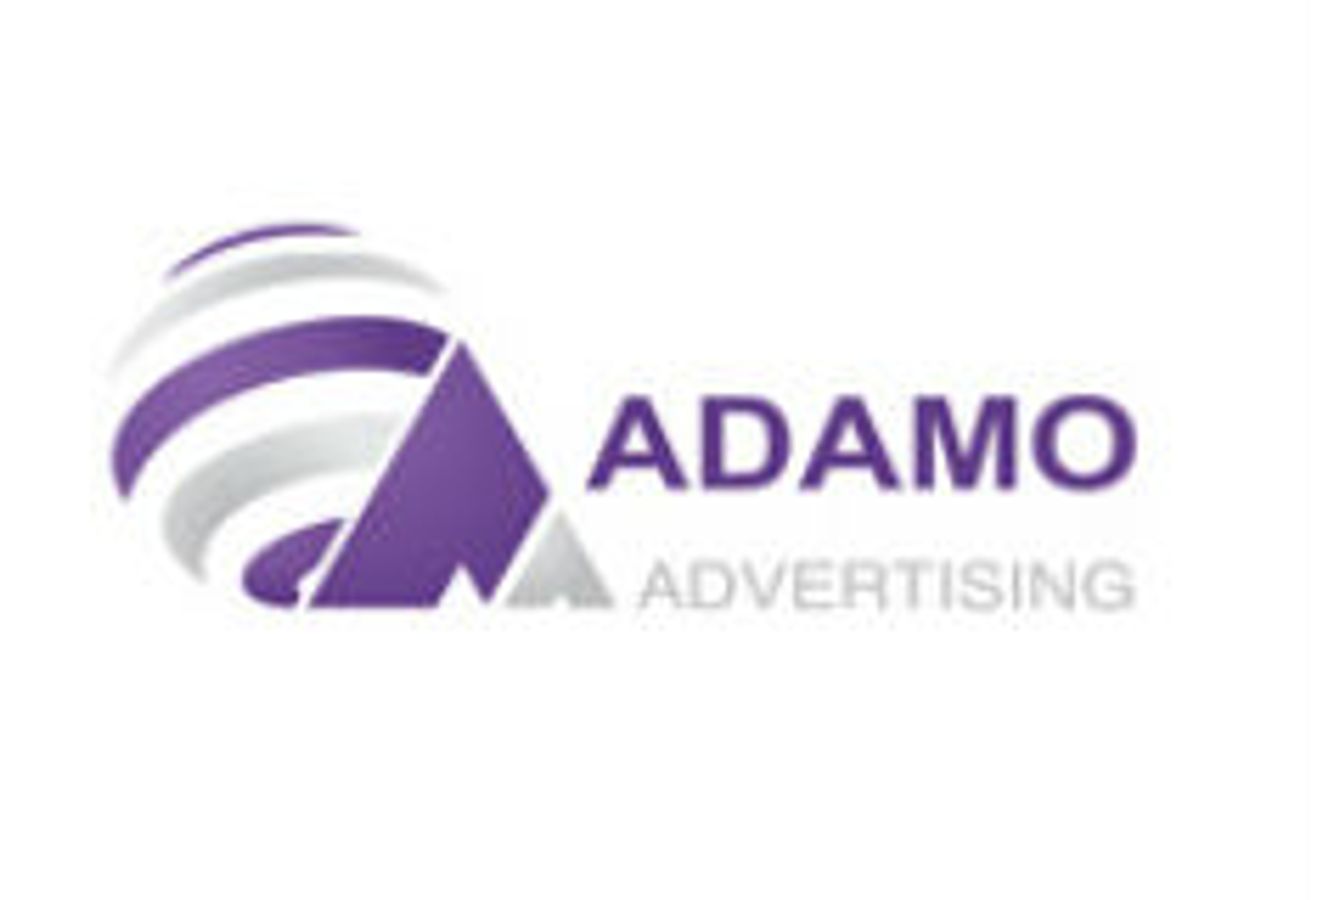 ADAMO Ads